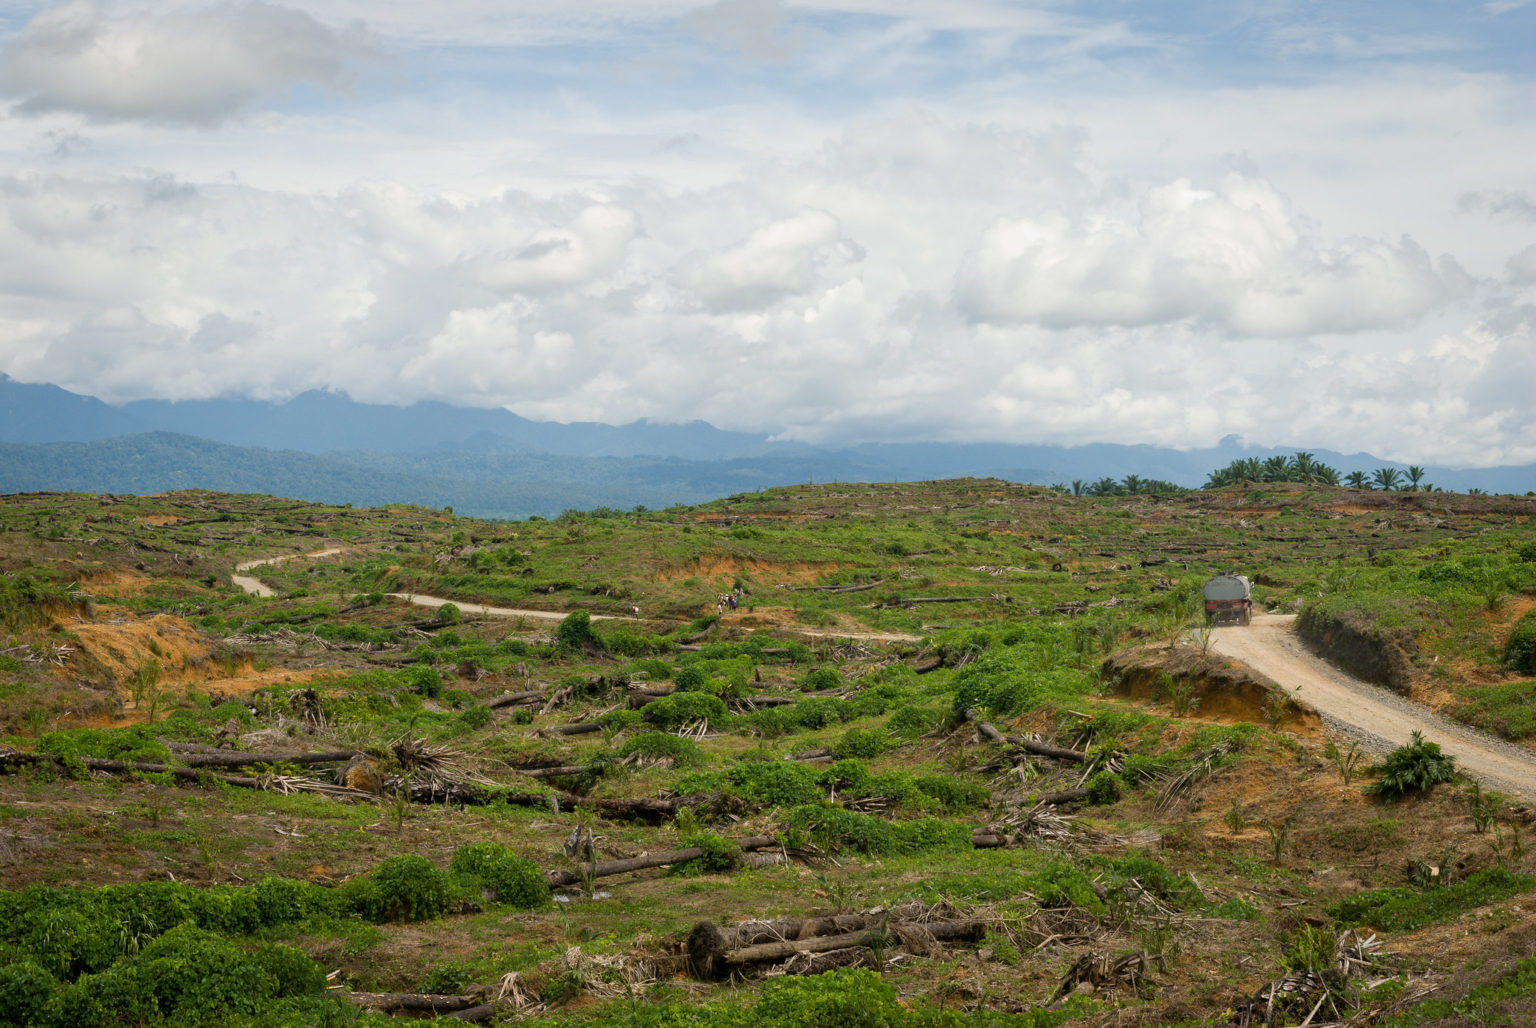 photo of deforested landscape